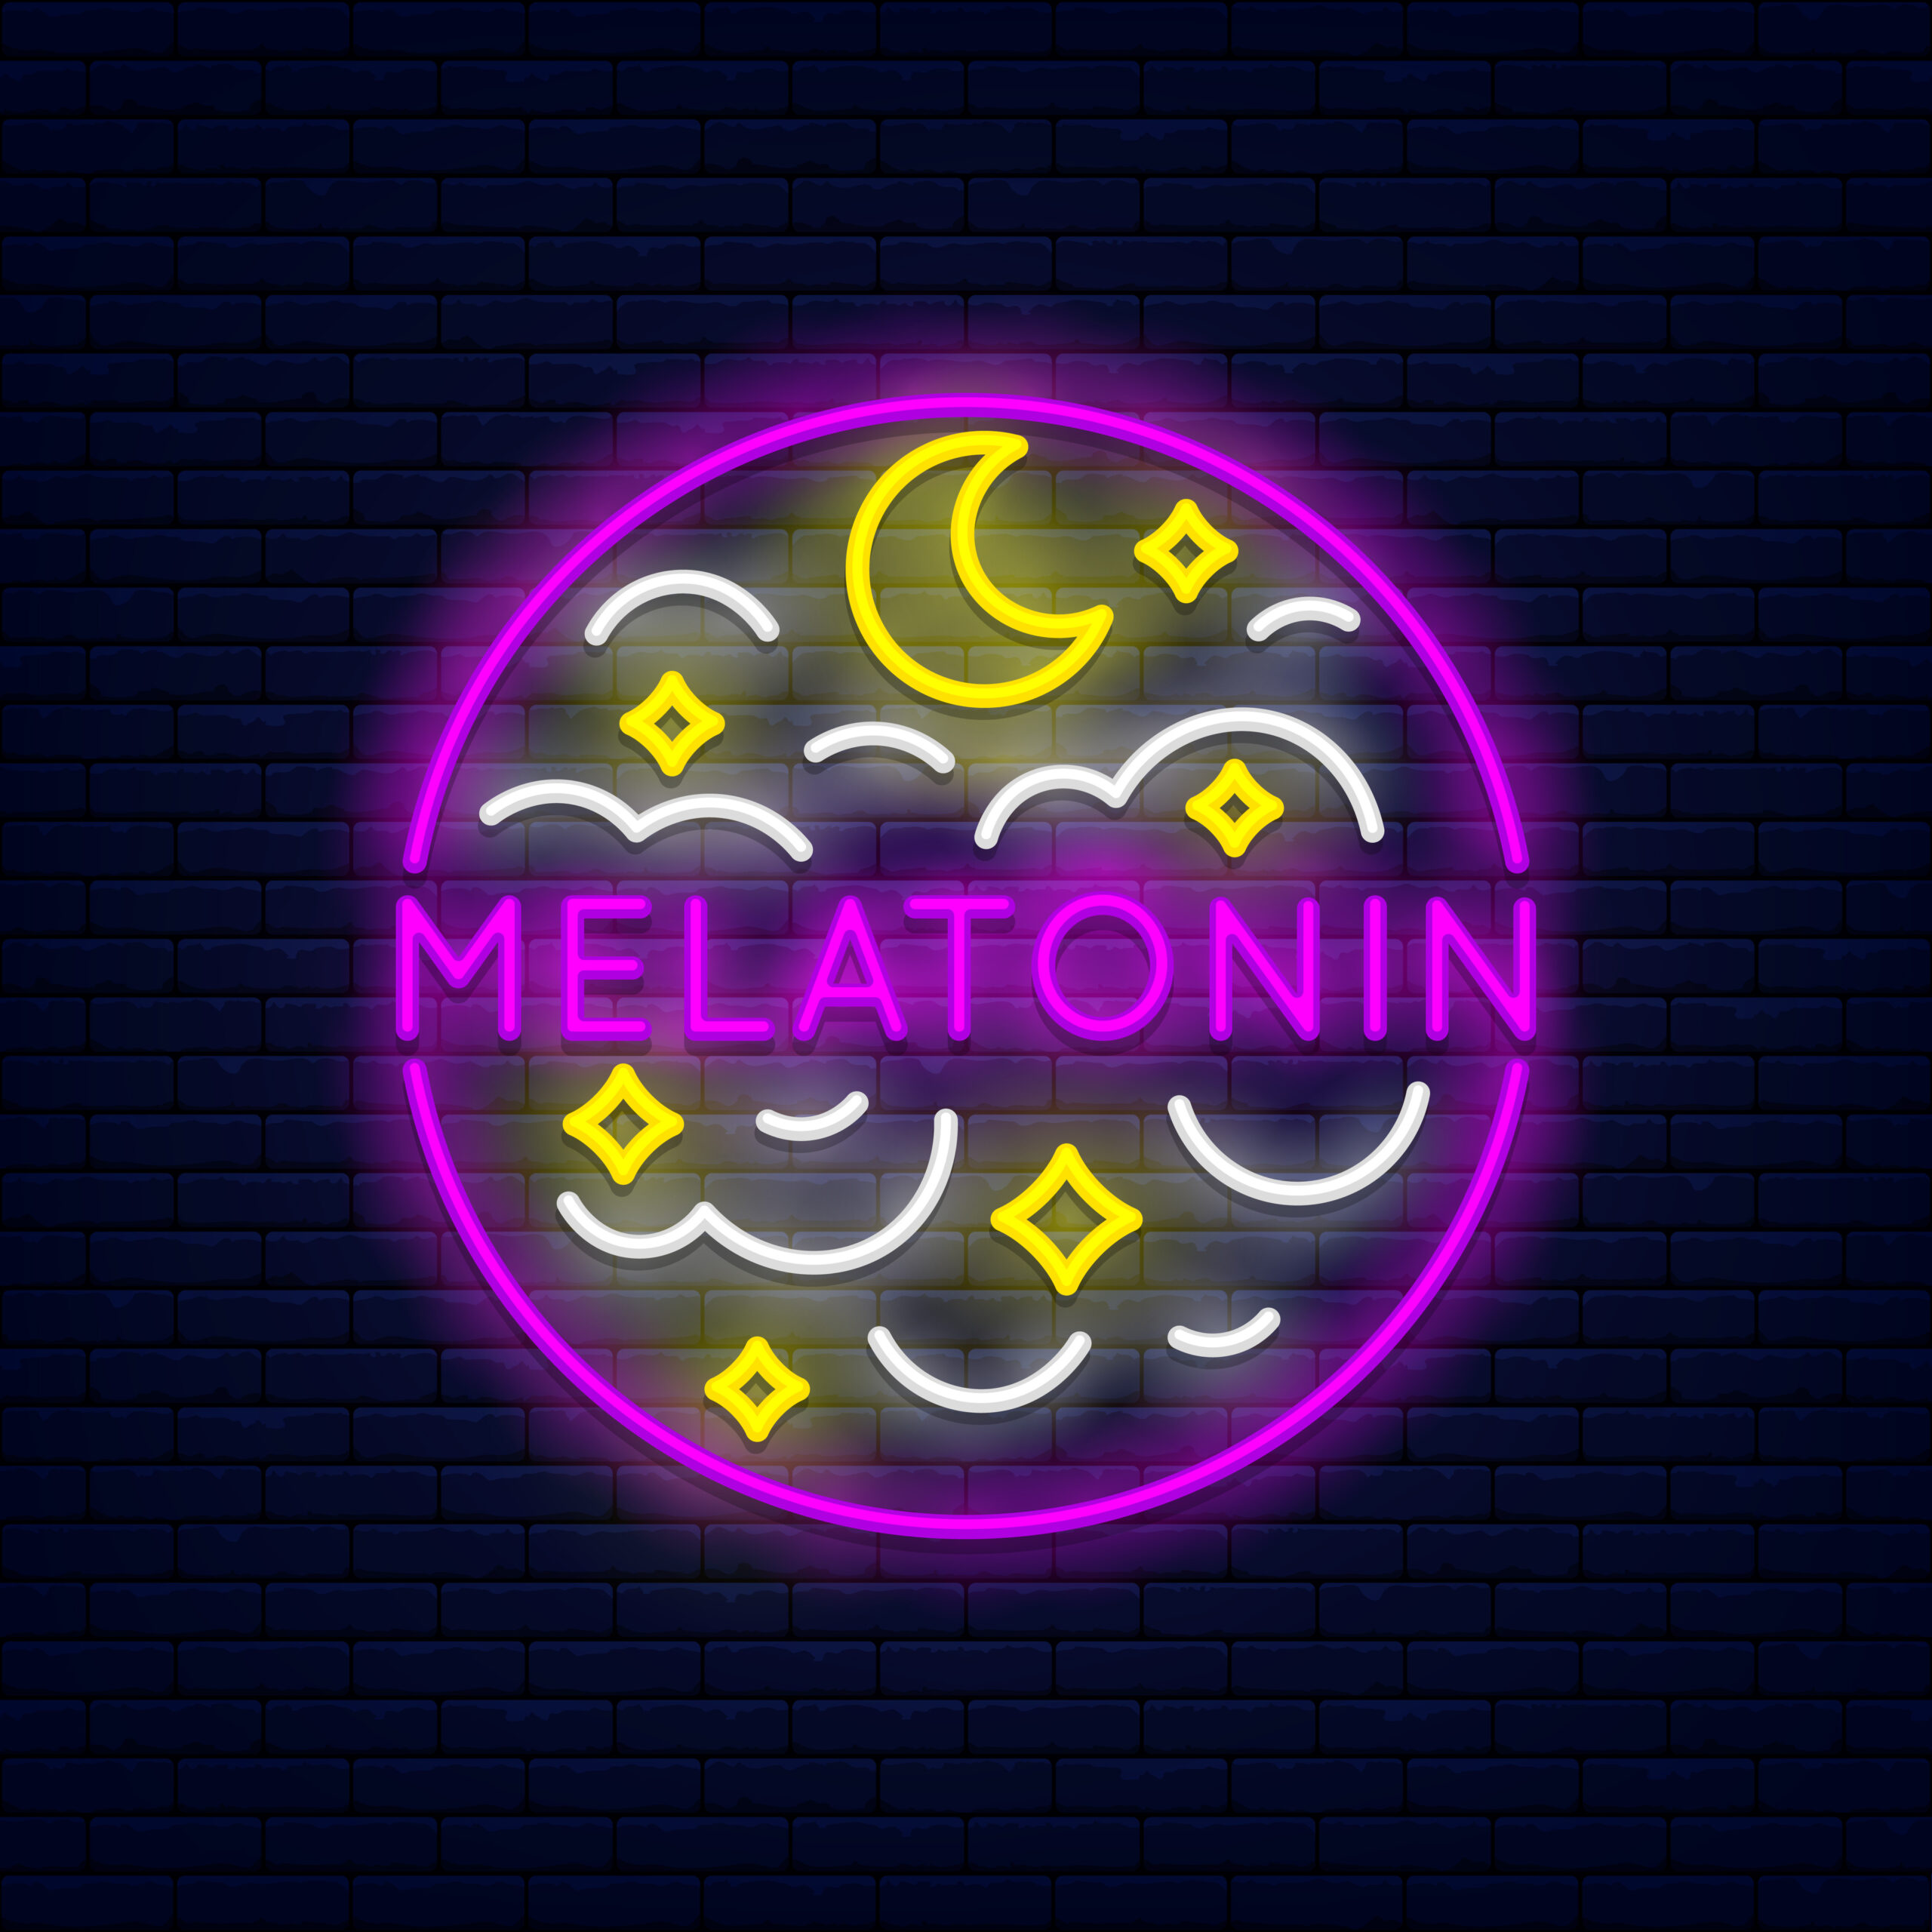 Melatonin - The Swiss Army Knife Among Antioxidants